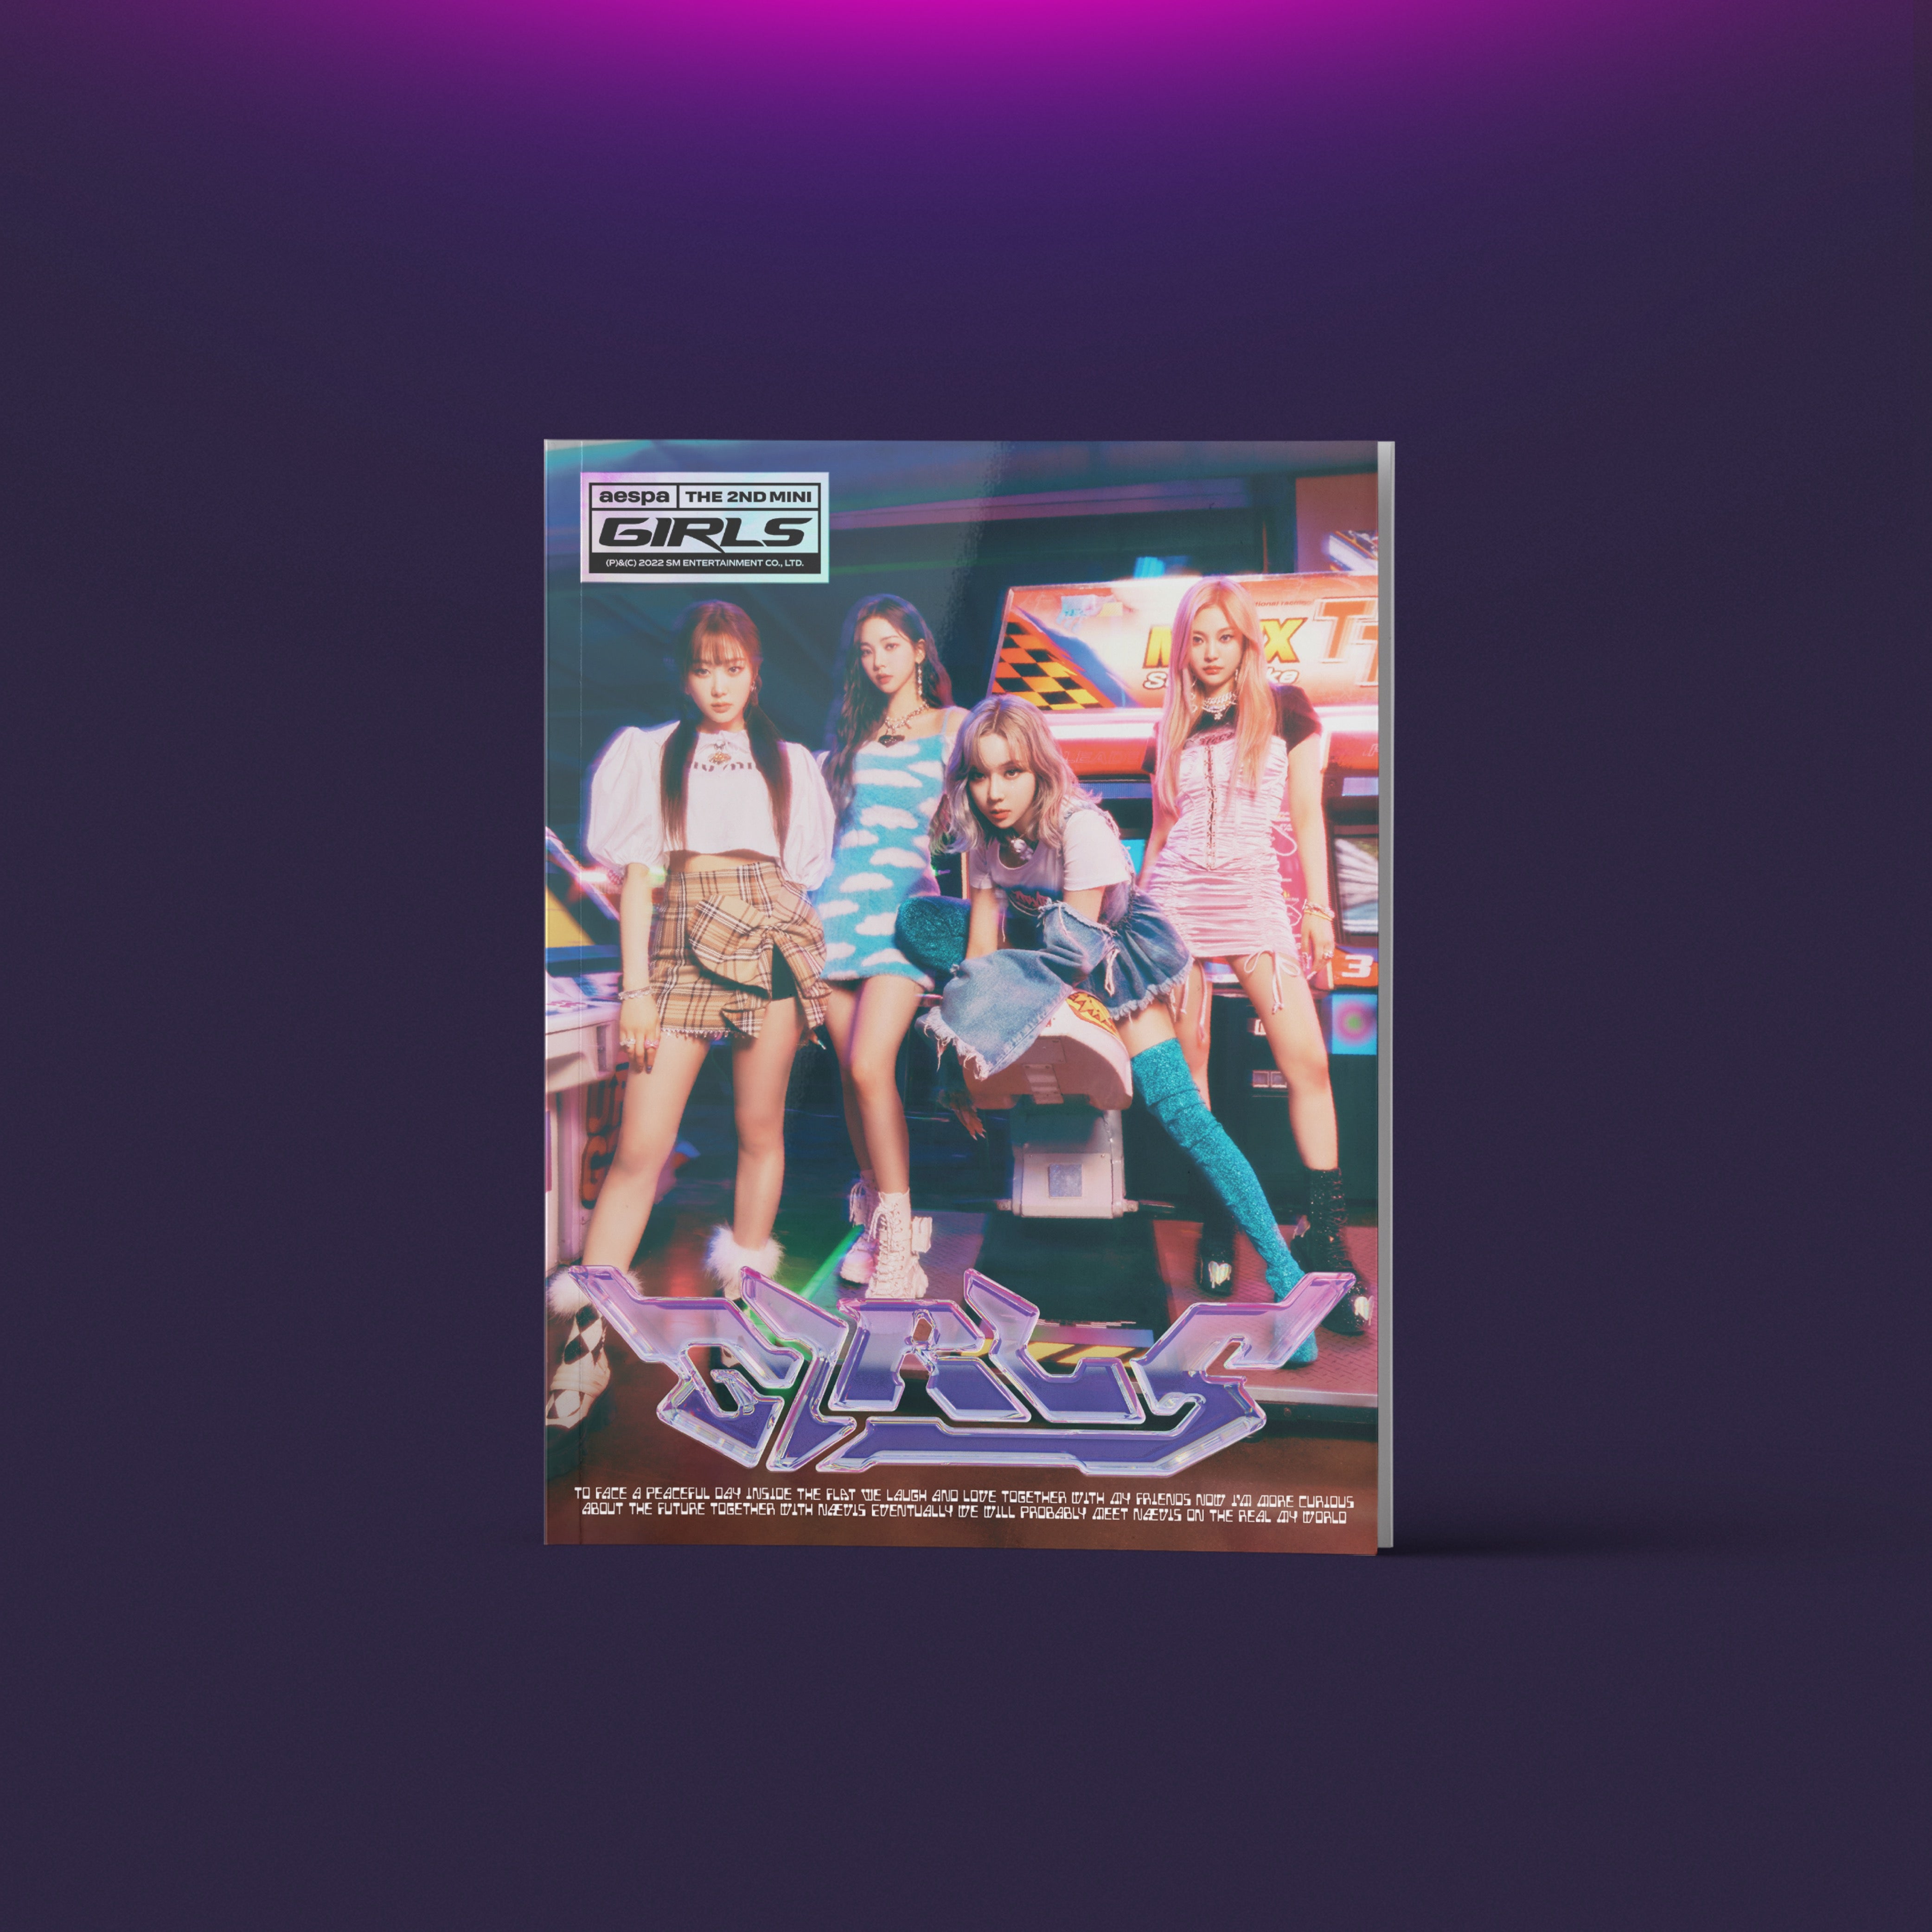 aespa - Girls 2nd Mini Album (Real World Ver.)